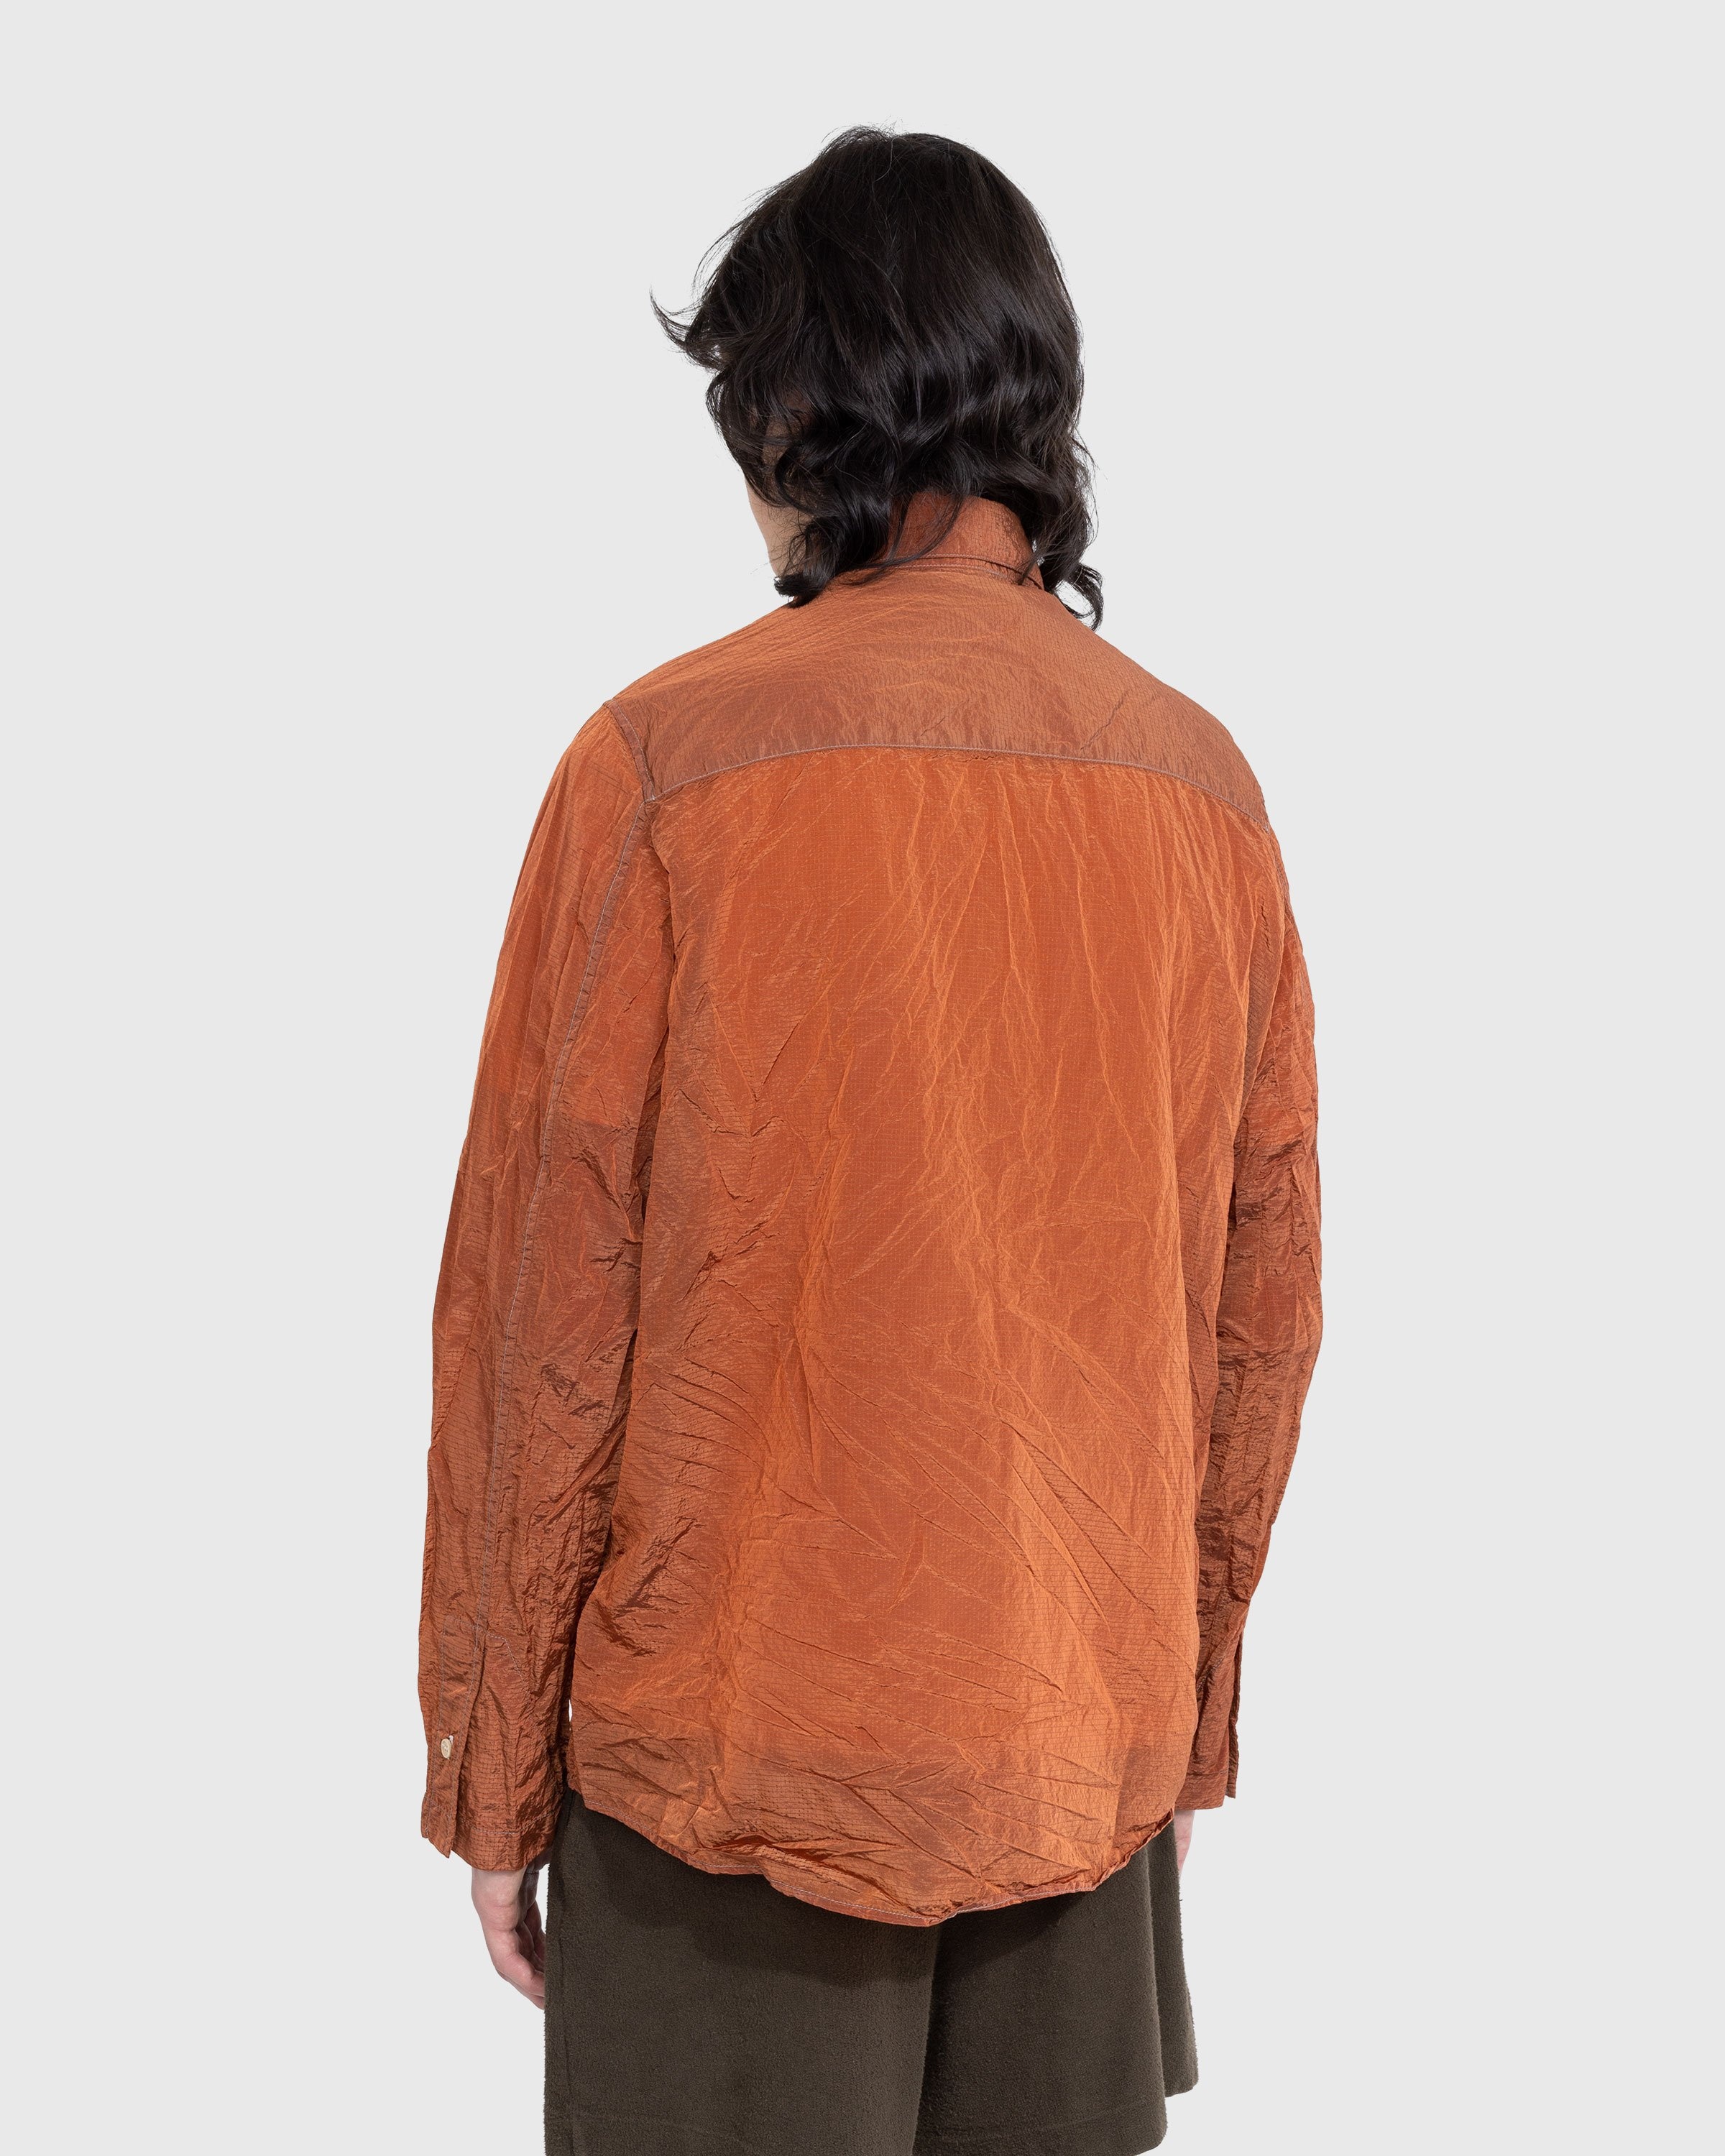 RANRA – Jor Shirt Jacket Pureed Plum | Highsnobiety Shop